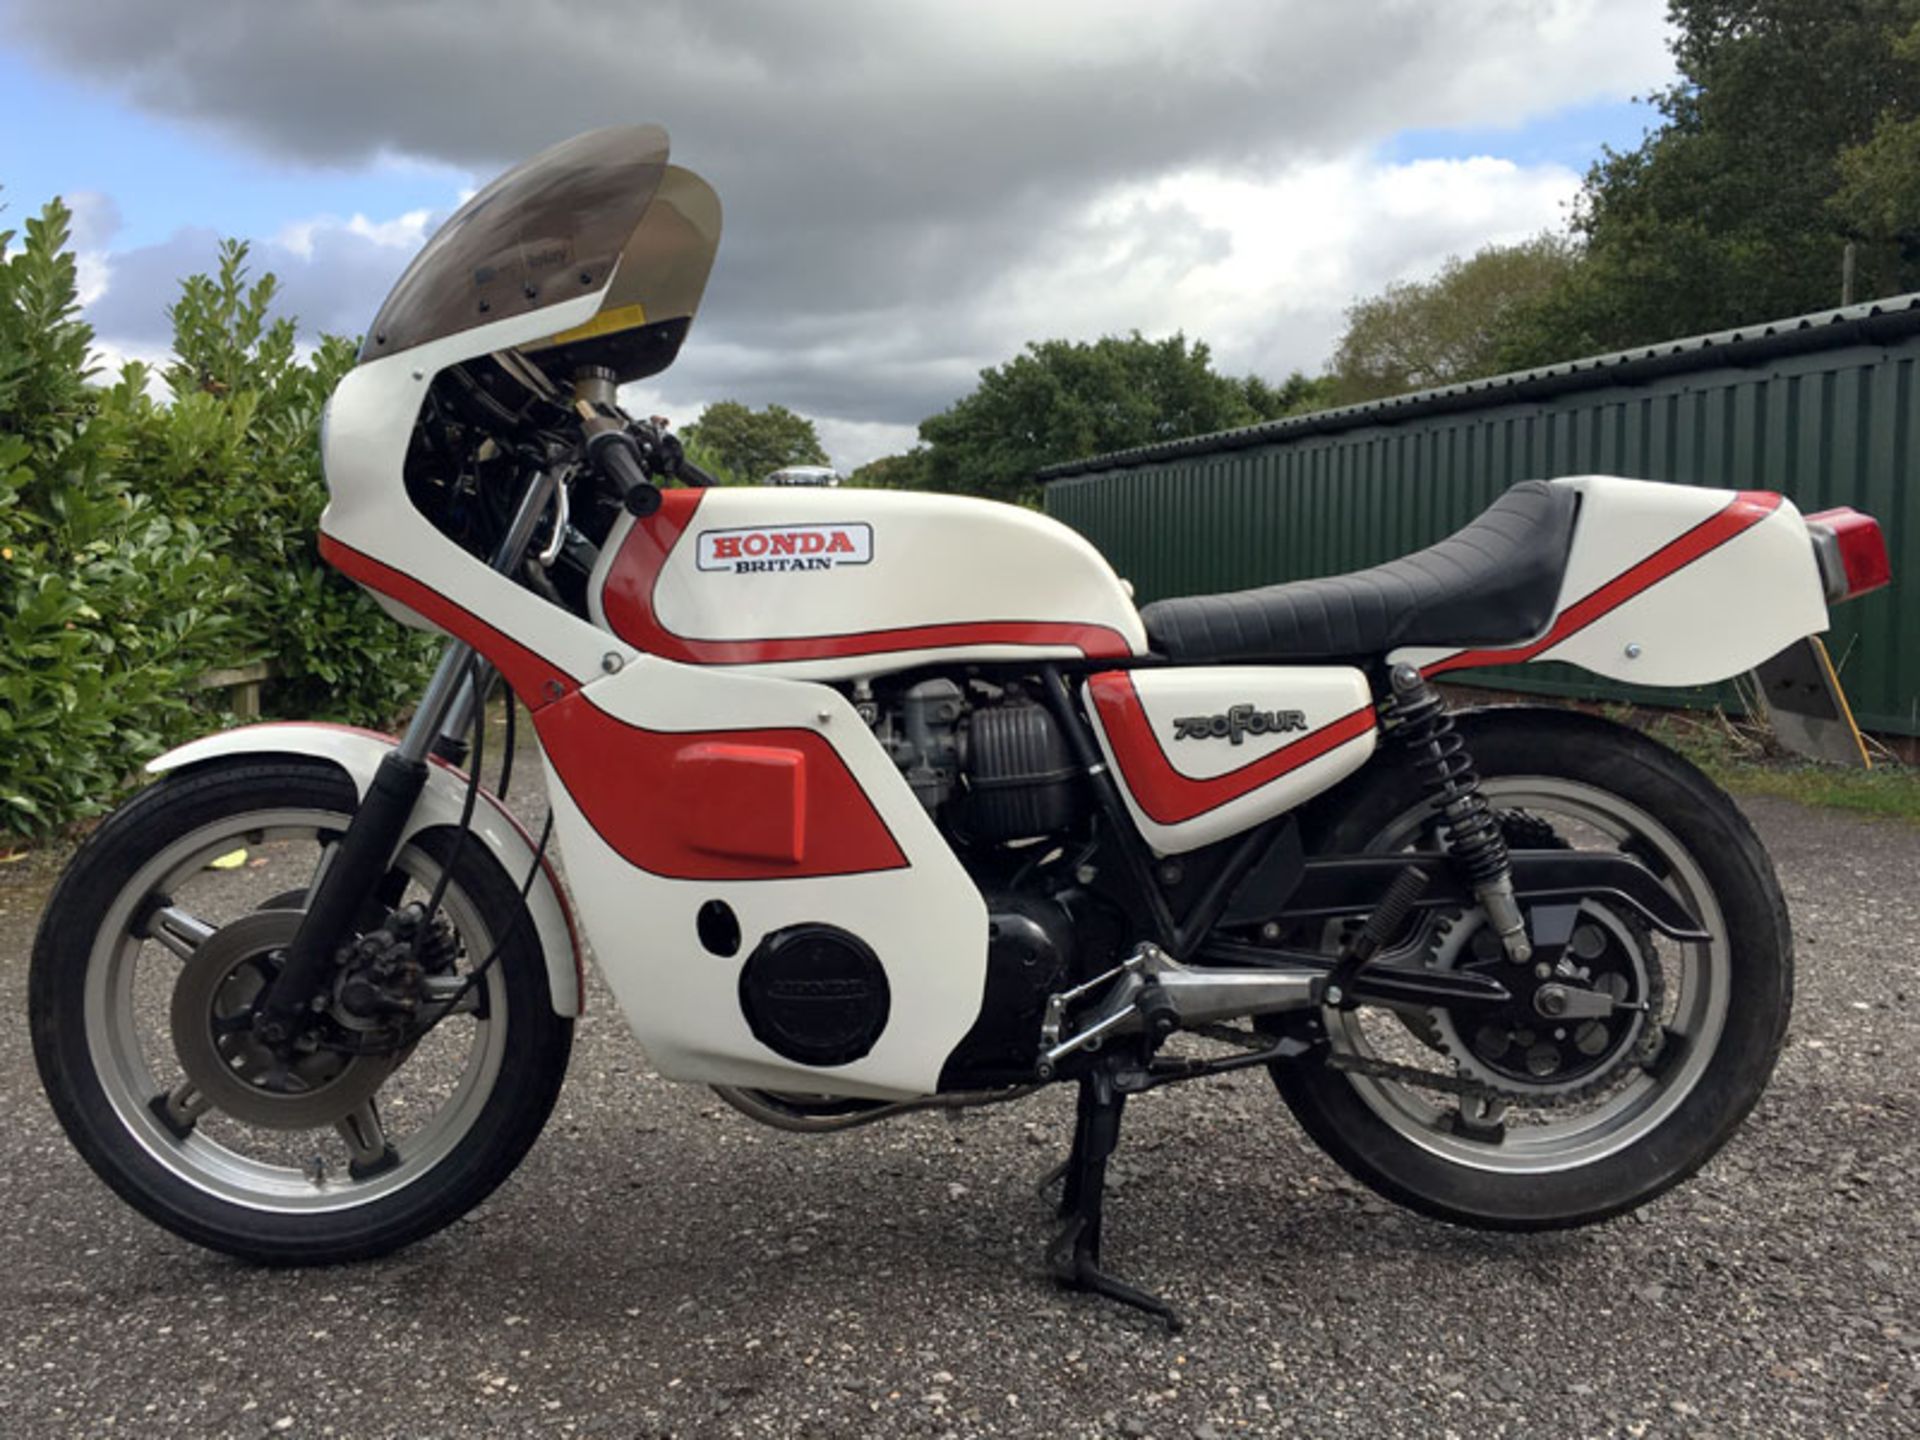 1979 Honda CB750 SS Britain - Image 2 of 4